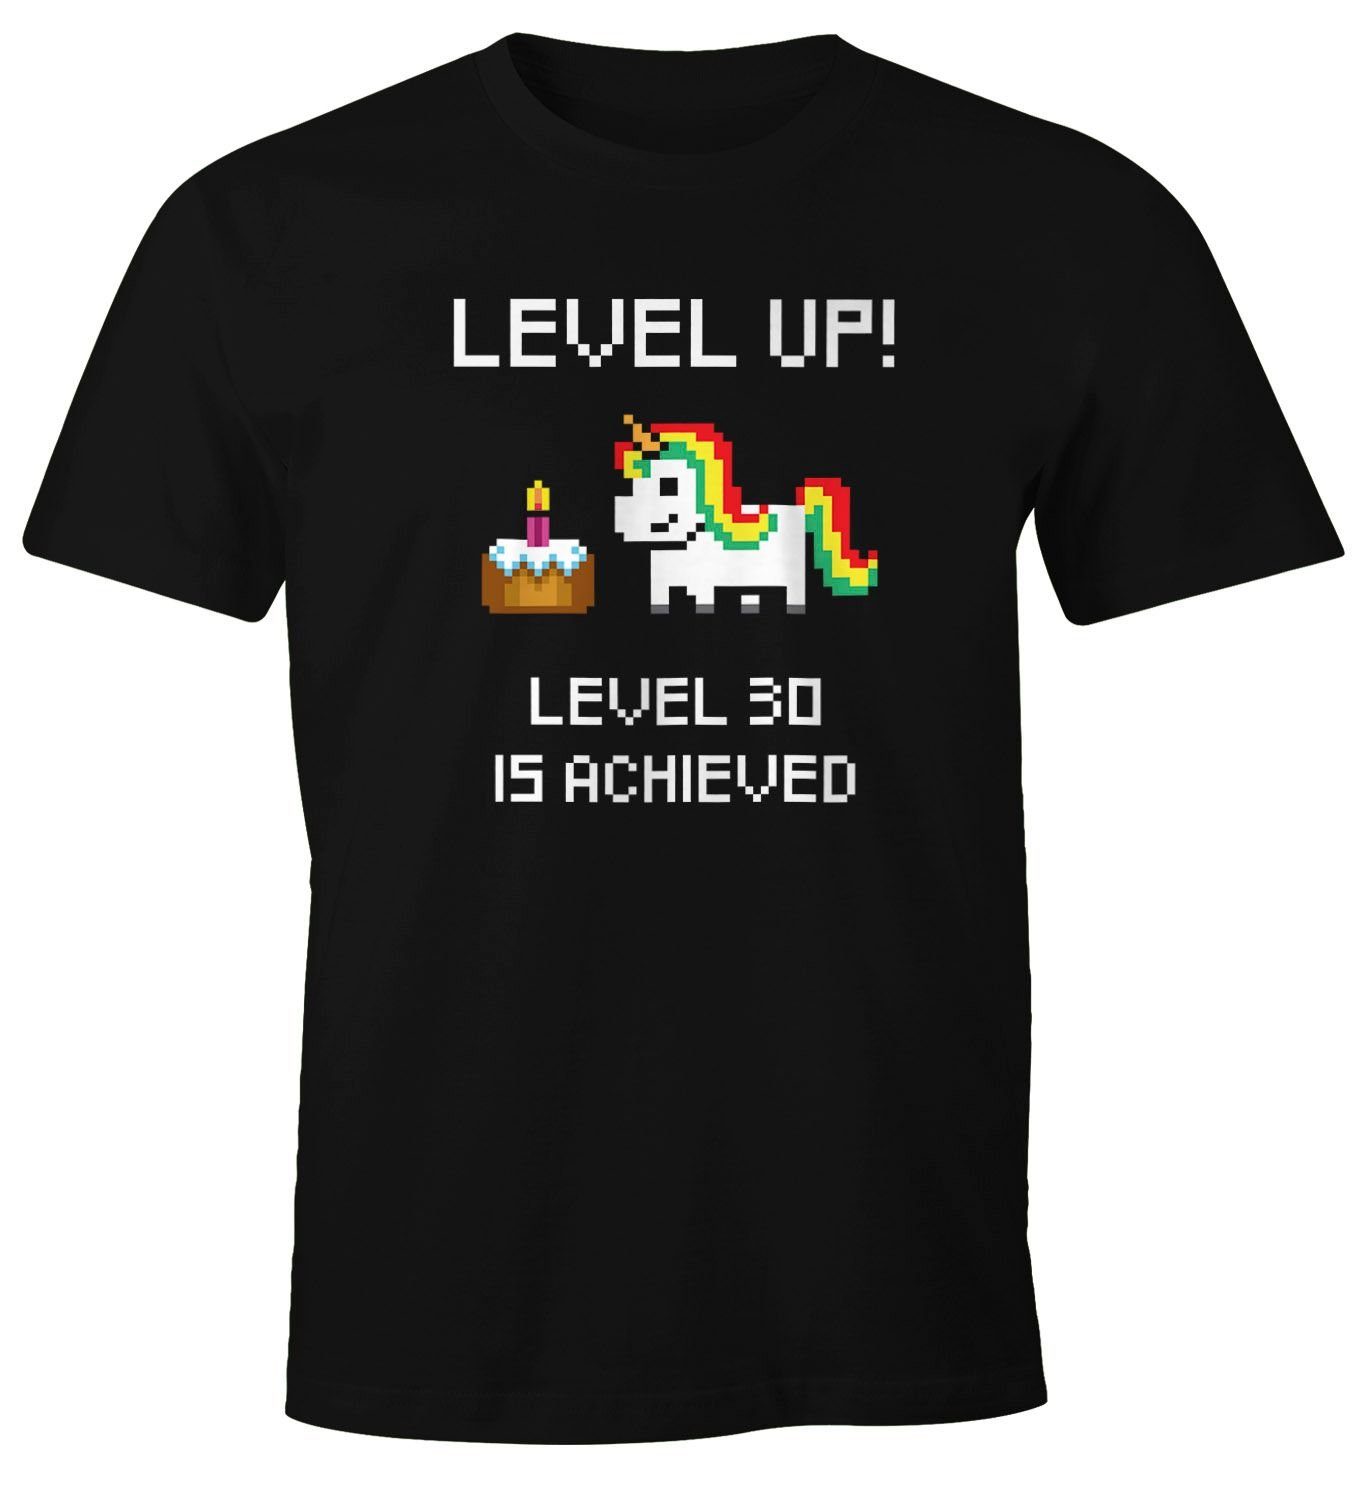 Retro Arcade Print Geschenk Print-Shirt Herren Moonworks® schwarz Pixel-Einhorn T-Shirt 30 Geburtstag Level Gamer Fun-Shirt Pixelgrafik Torte Up mit MoonWorks